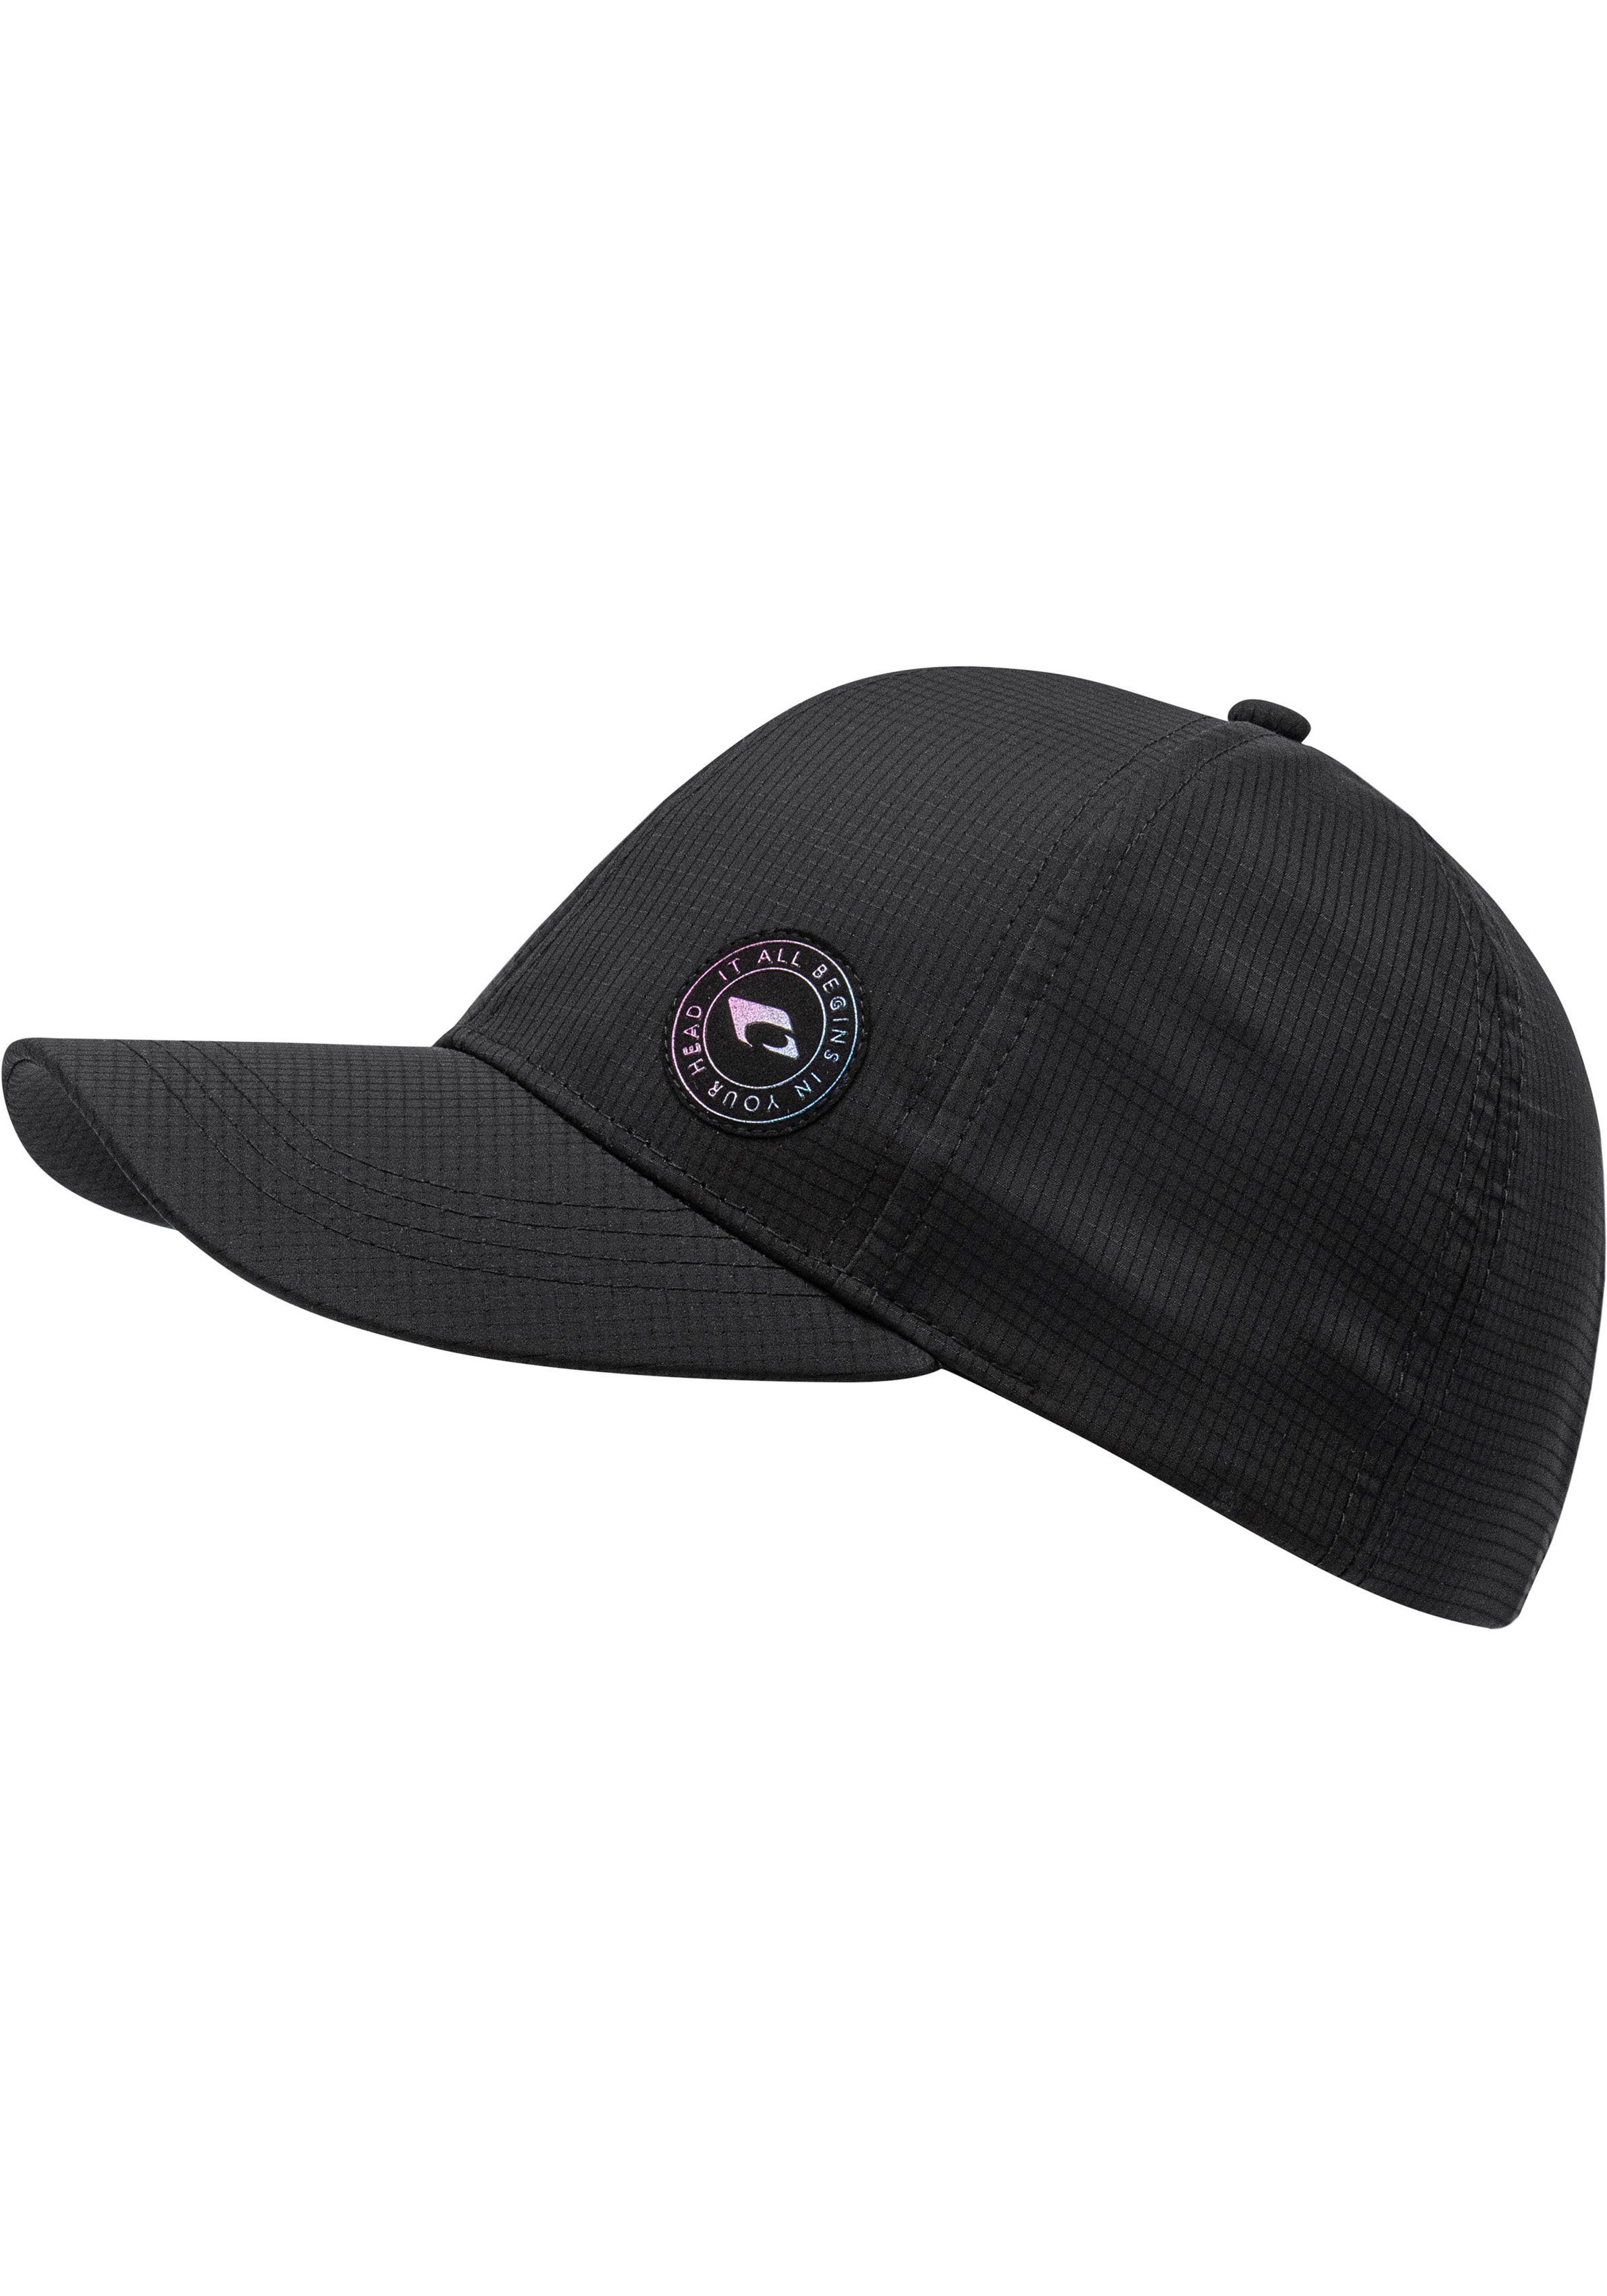 Cap verstellbar chillouts Individuell Hat, Baseball Langley